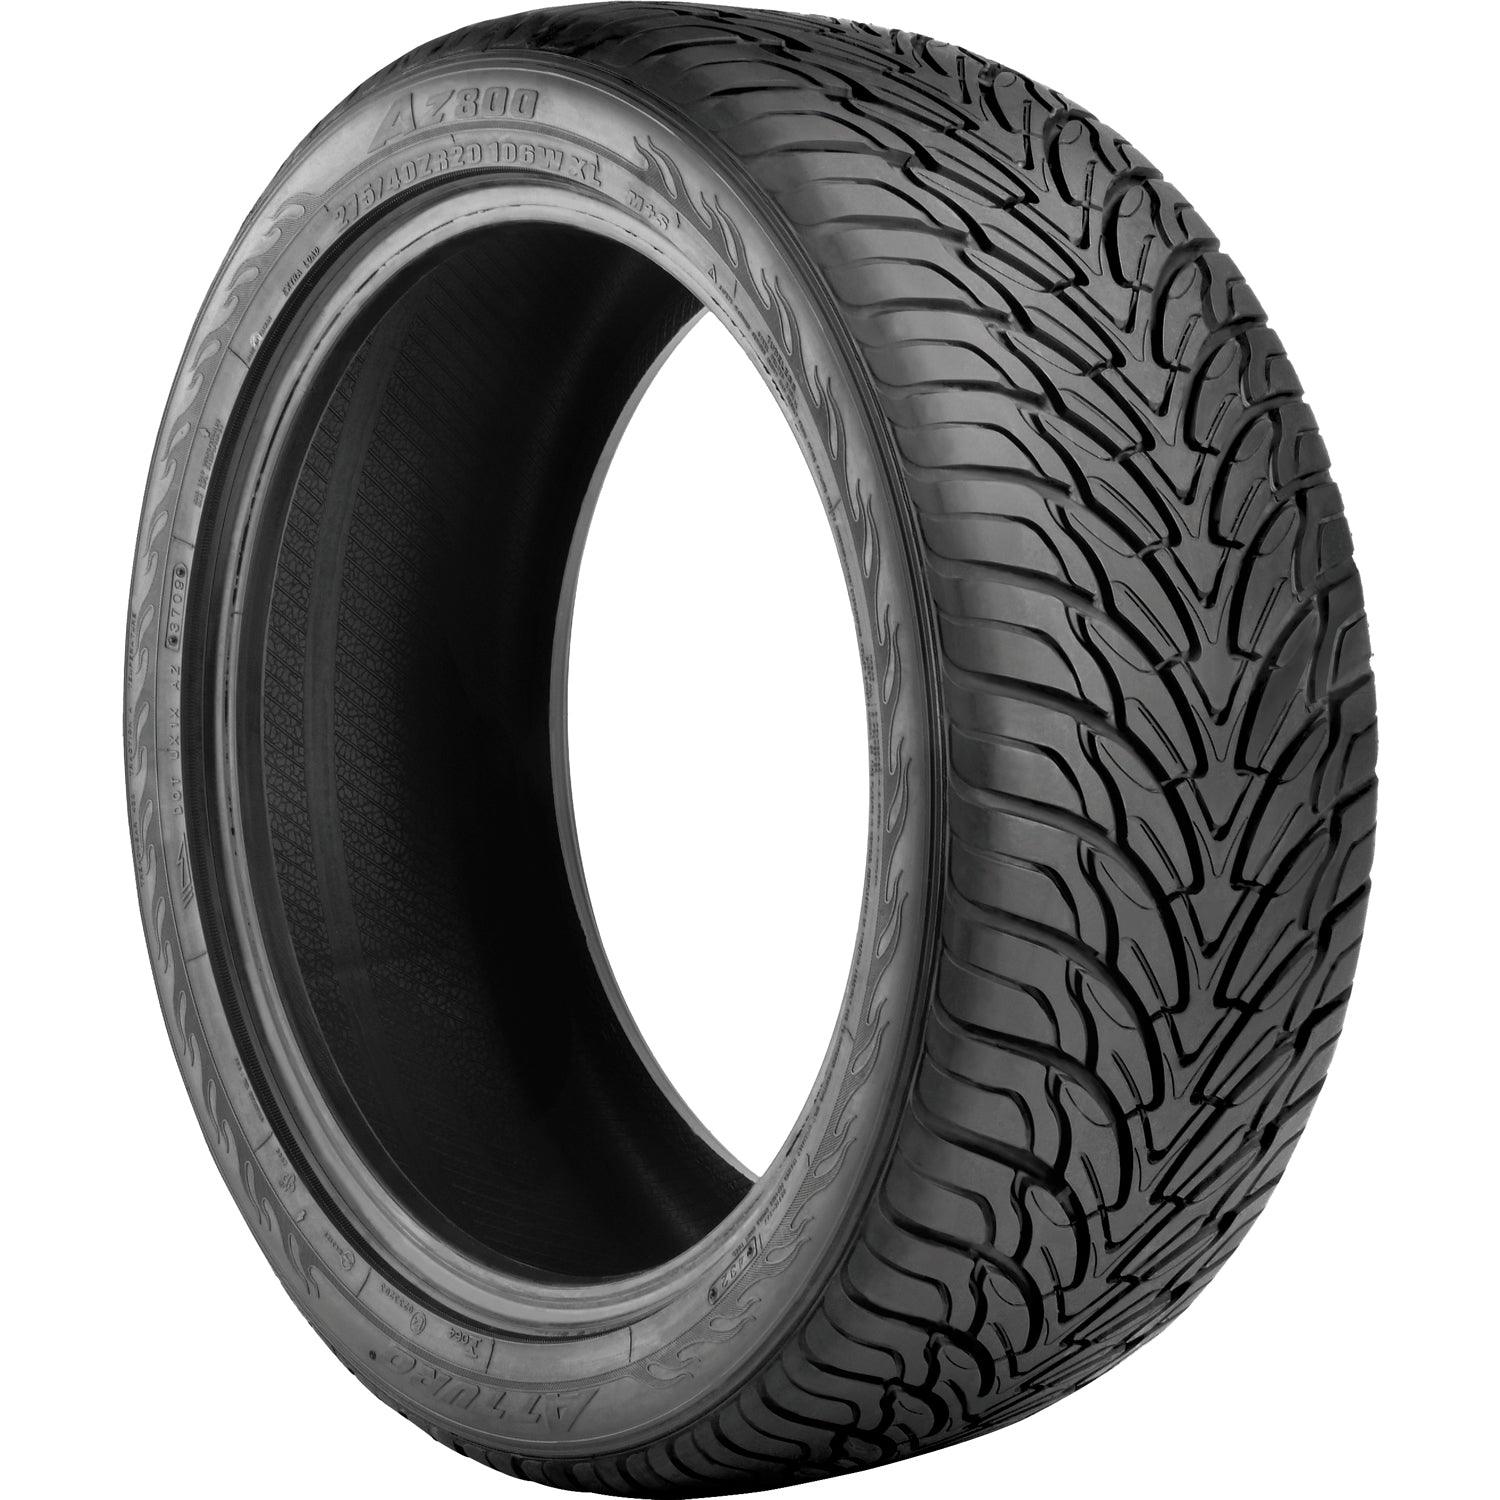 ATTURO AZ800 275/40R20 (28.8X10.8R 20) Tires